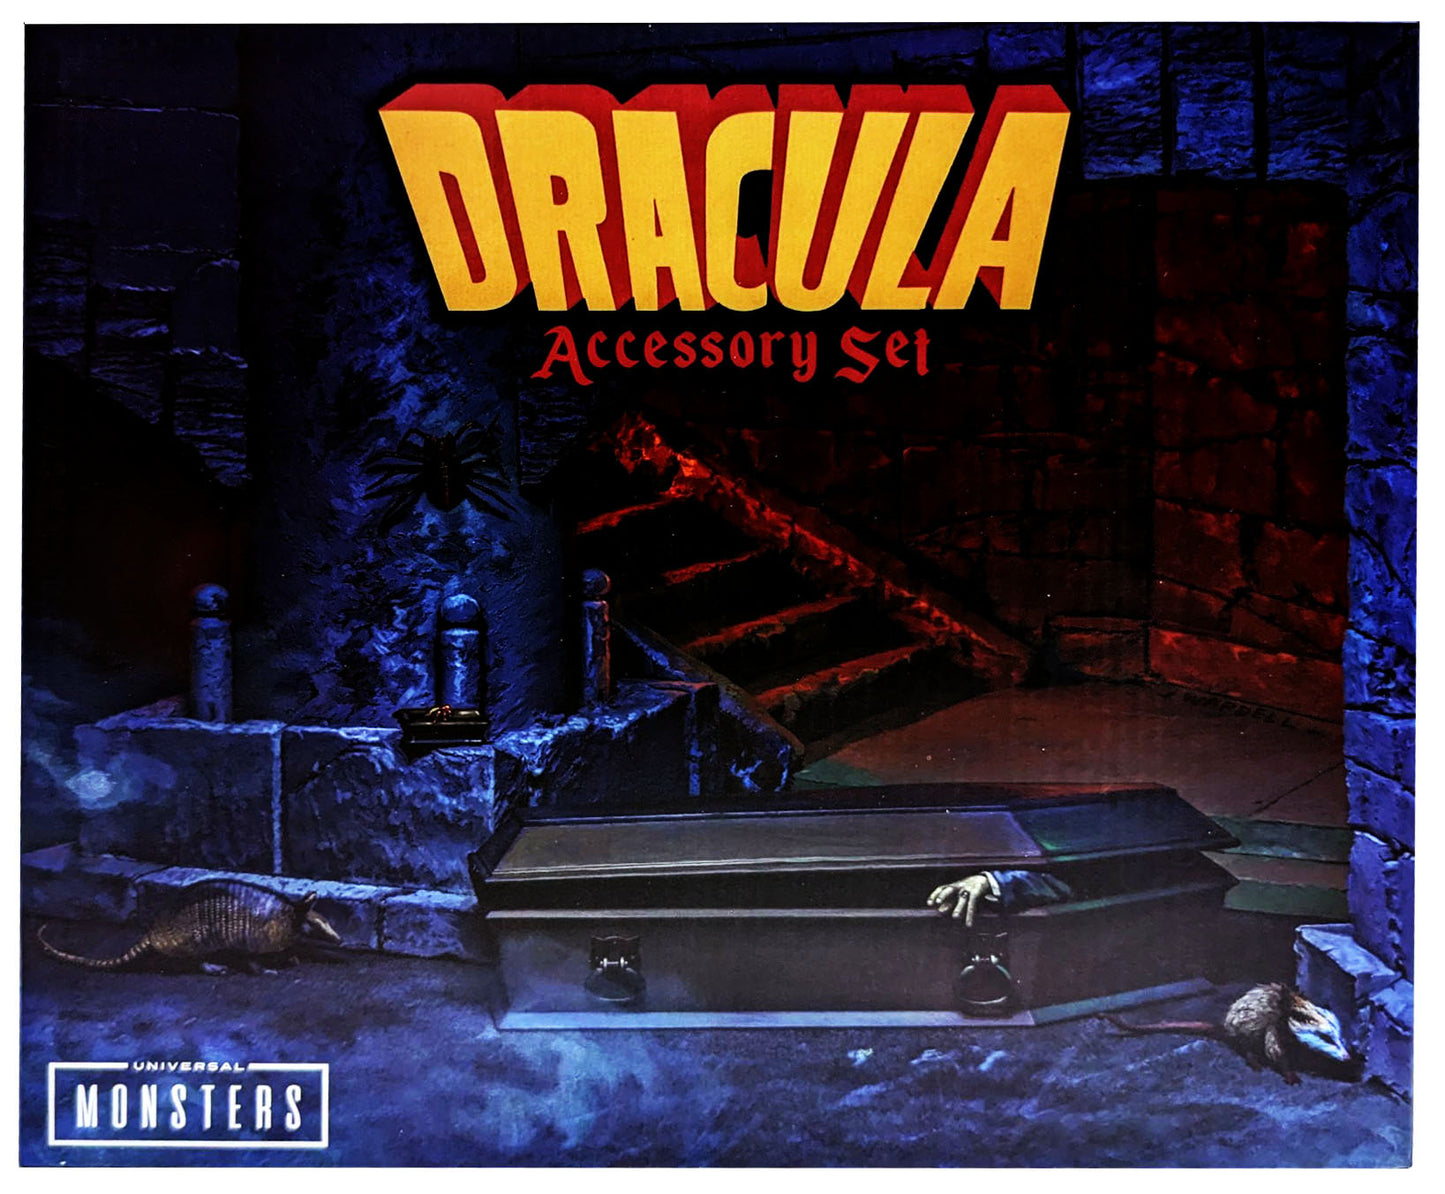 Universal Monsters Dracula Accessory Set